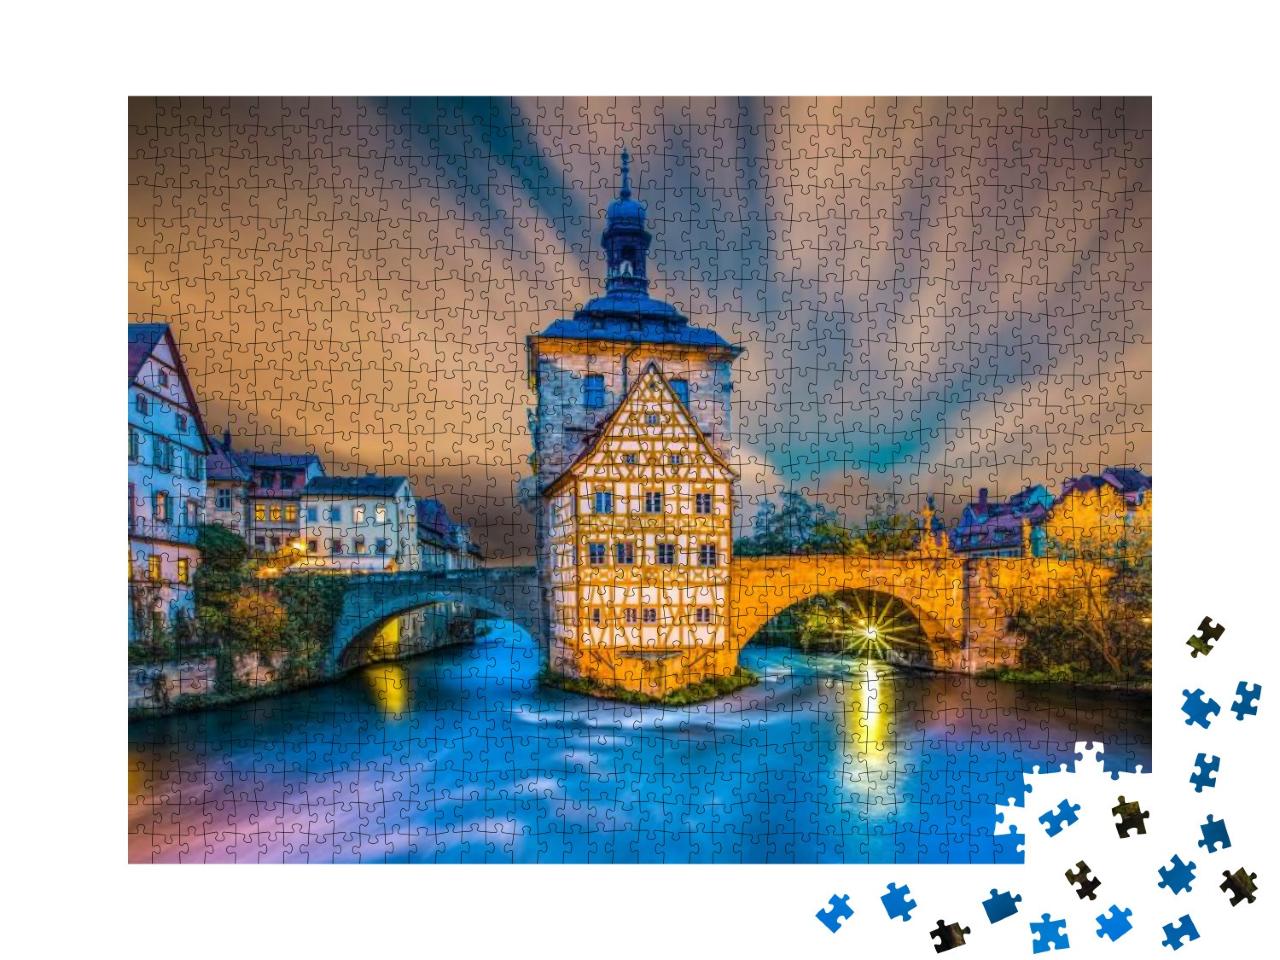 Puzzle 1000 Teile „Idyllische Altstadt in Bamberg, Deutschland“